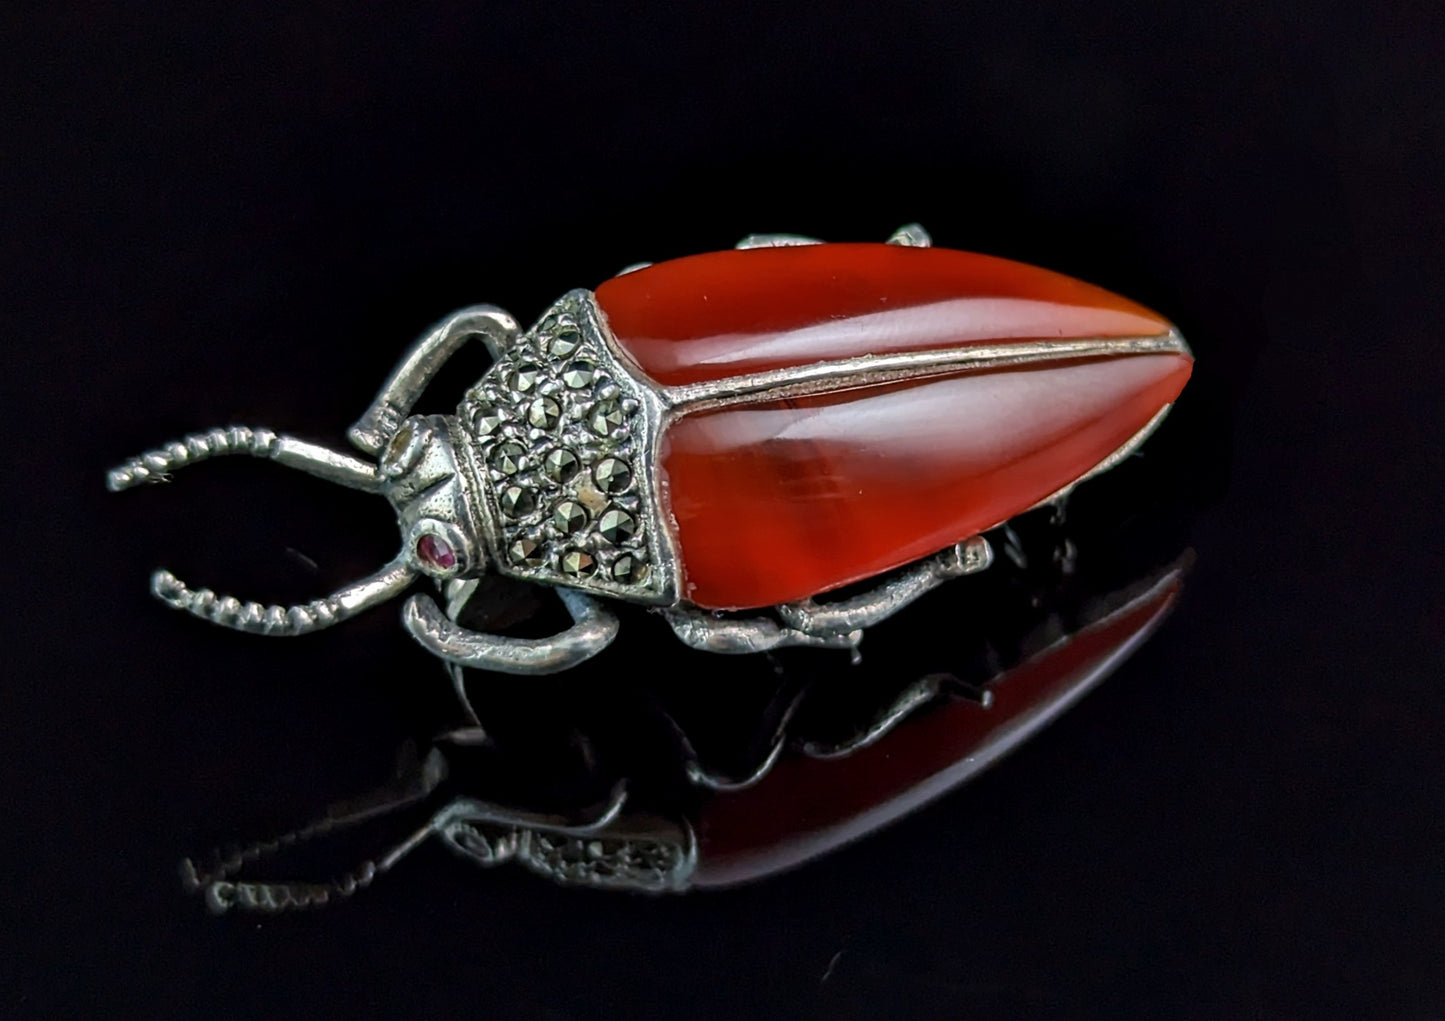 Vintage Carnelian and Marcasite beetle brooch, sterling silver